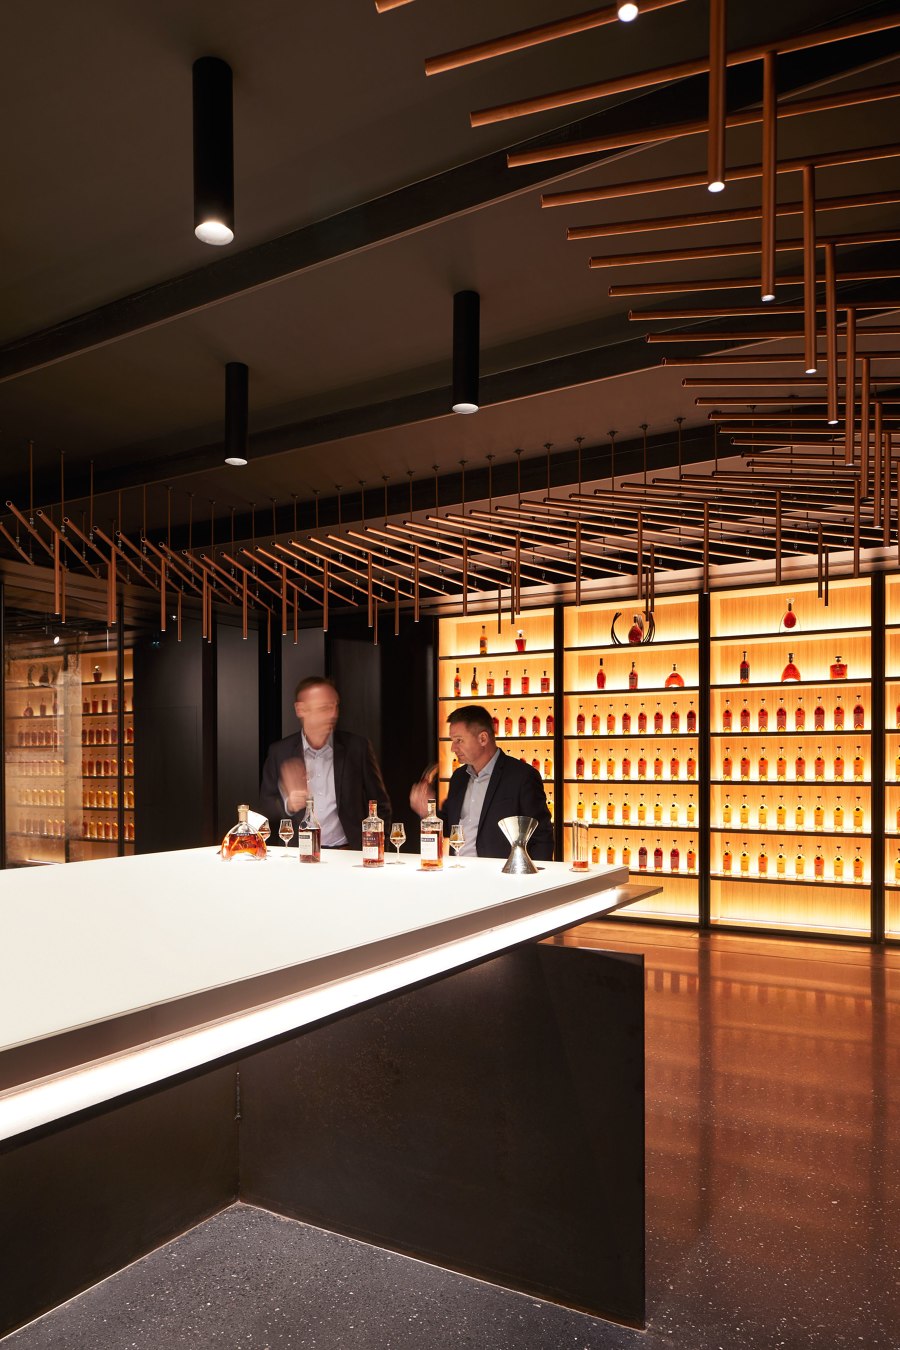 Tasting Room for Master Blenders di Elluin Duolé Gillon architecture | Clubs - Interni